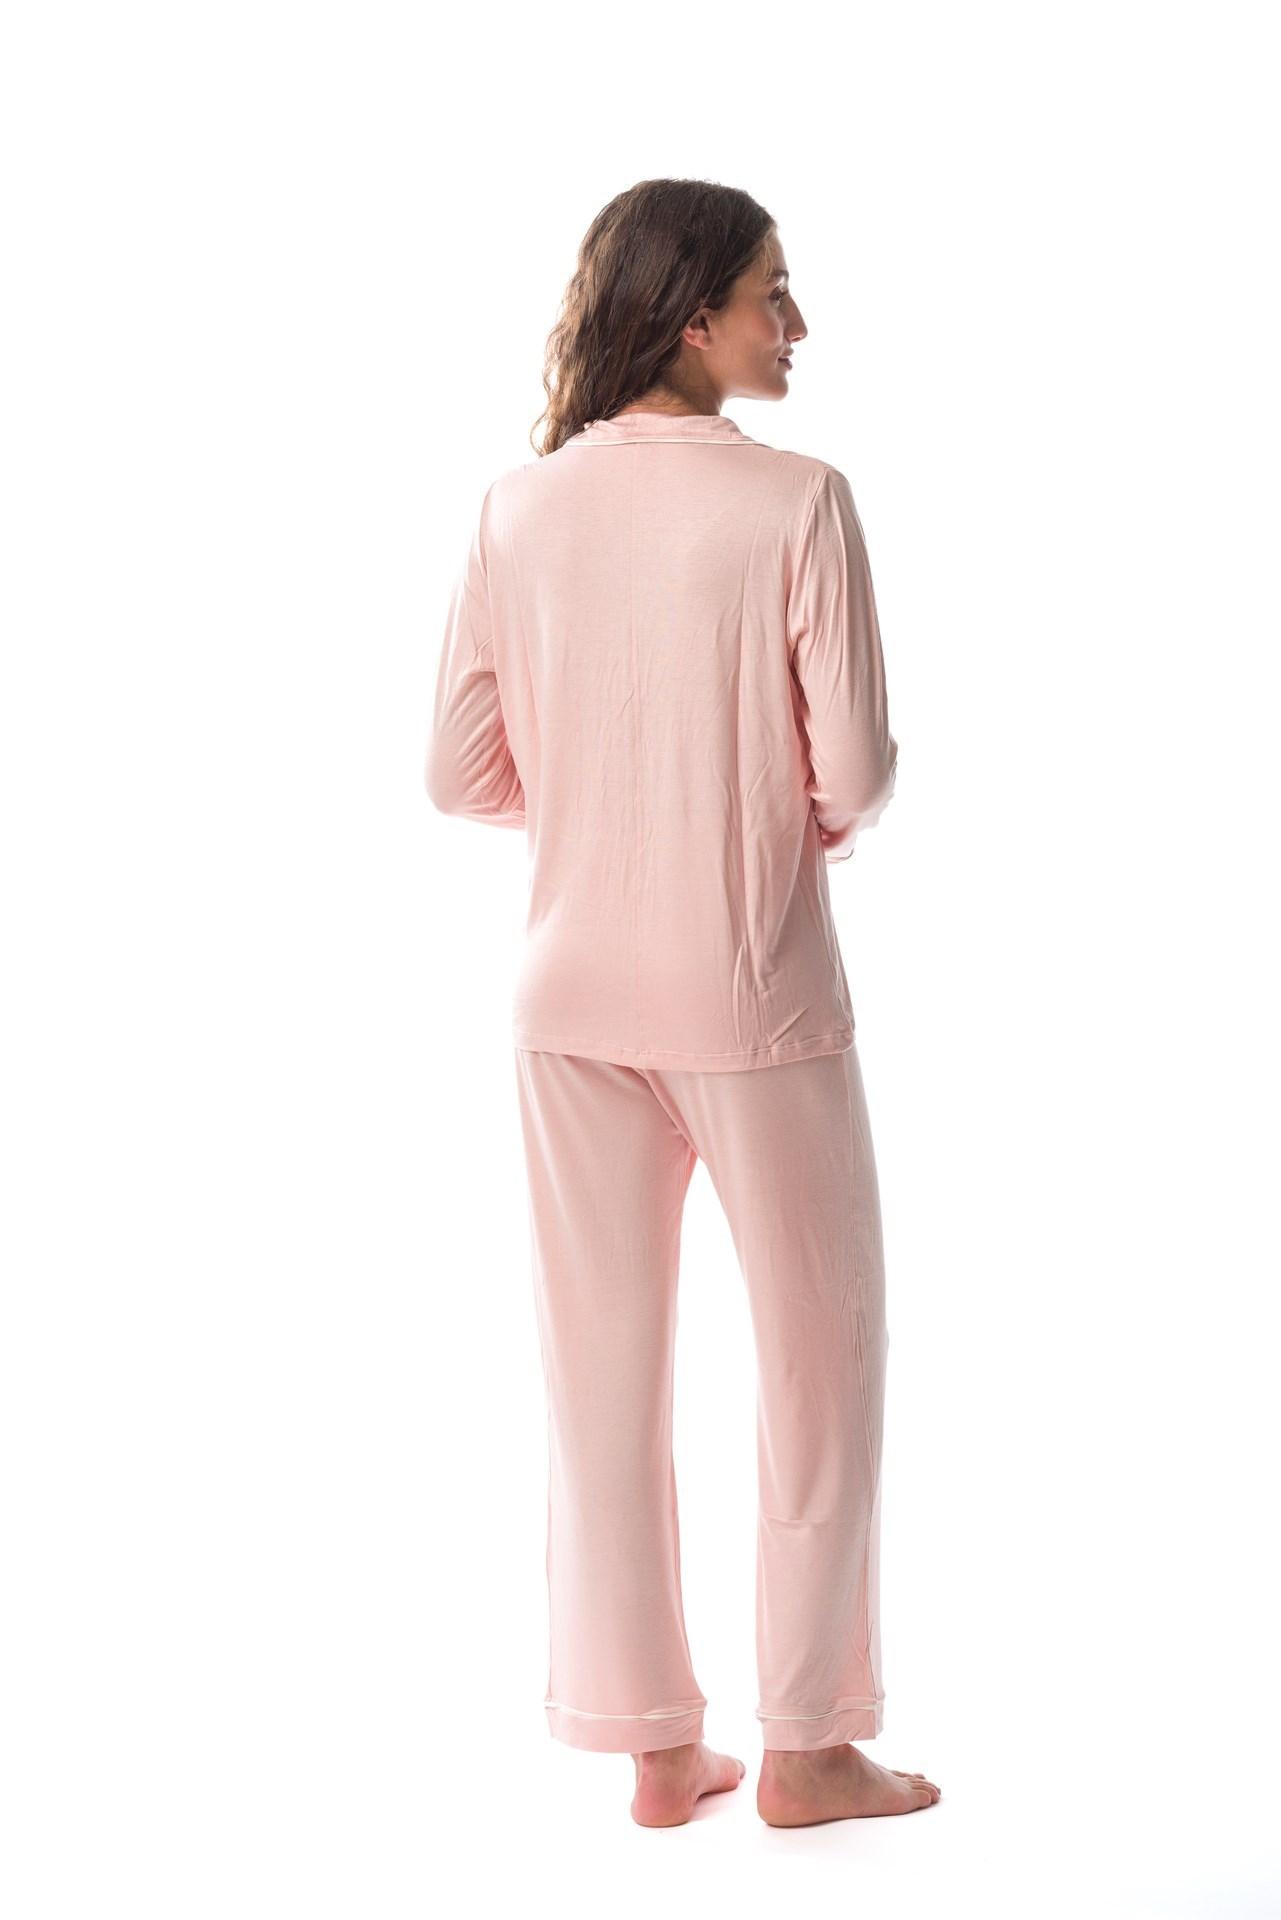 Donatella - Pijama Camisero Largo rosado pastel l